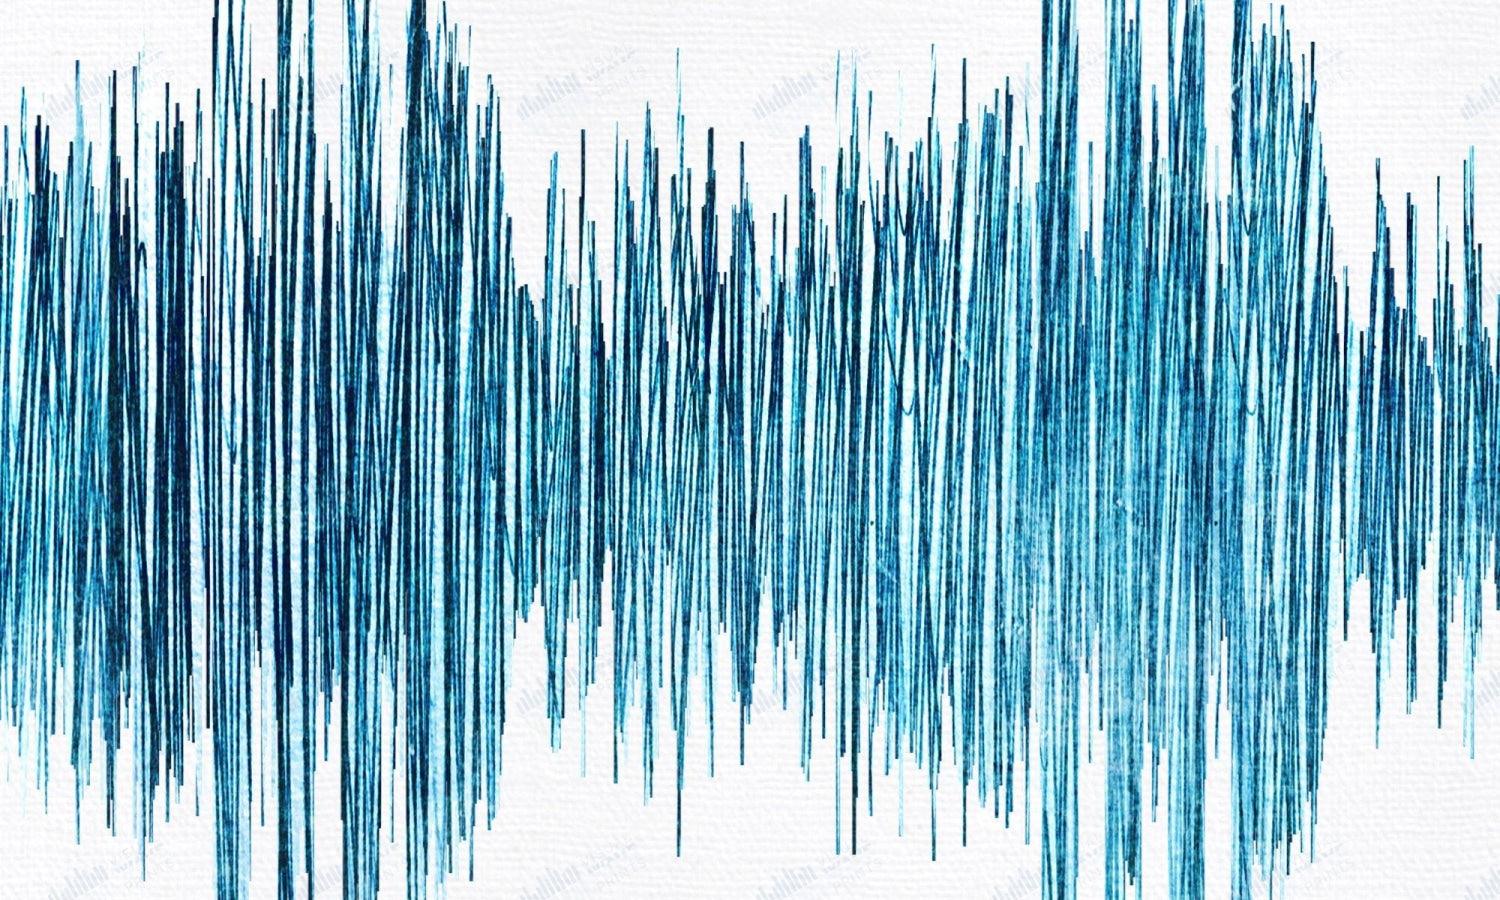 Hallelujah by Leonard Cohen - Visual Wave Prints